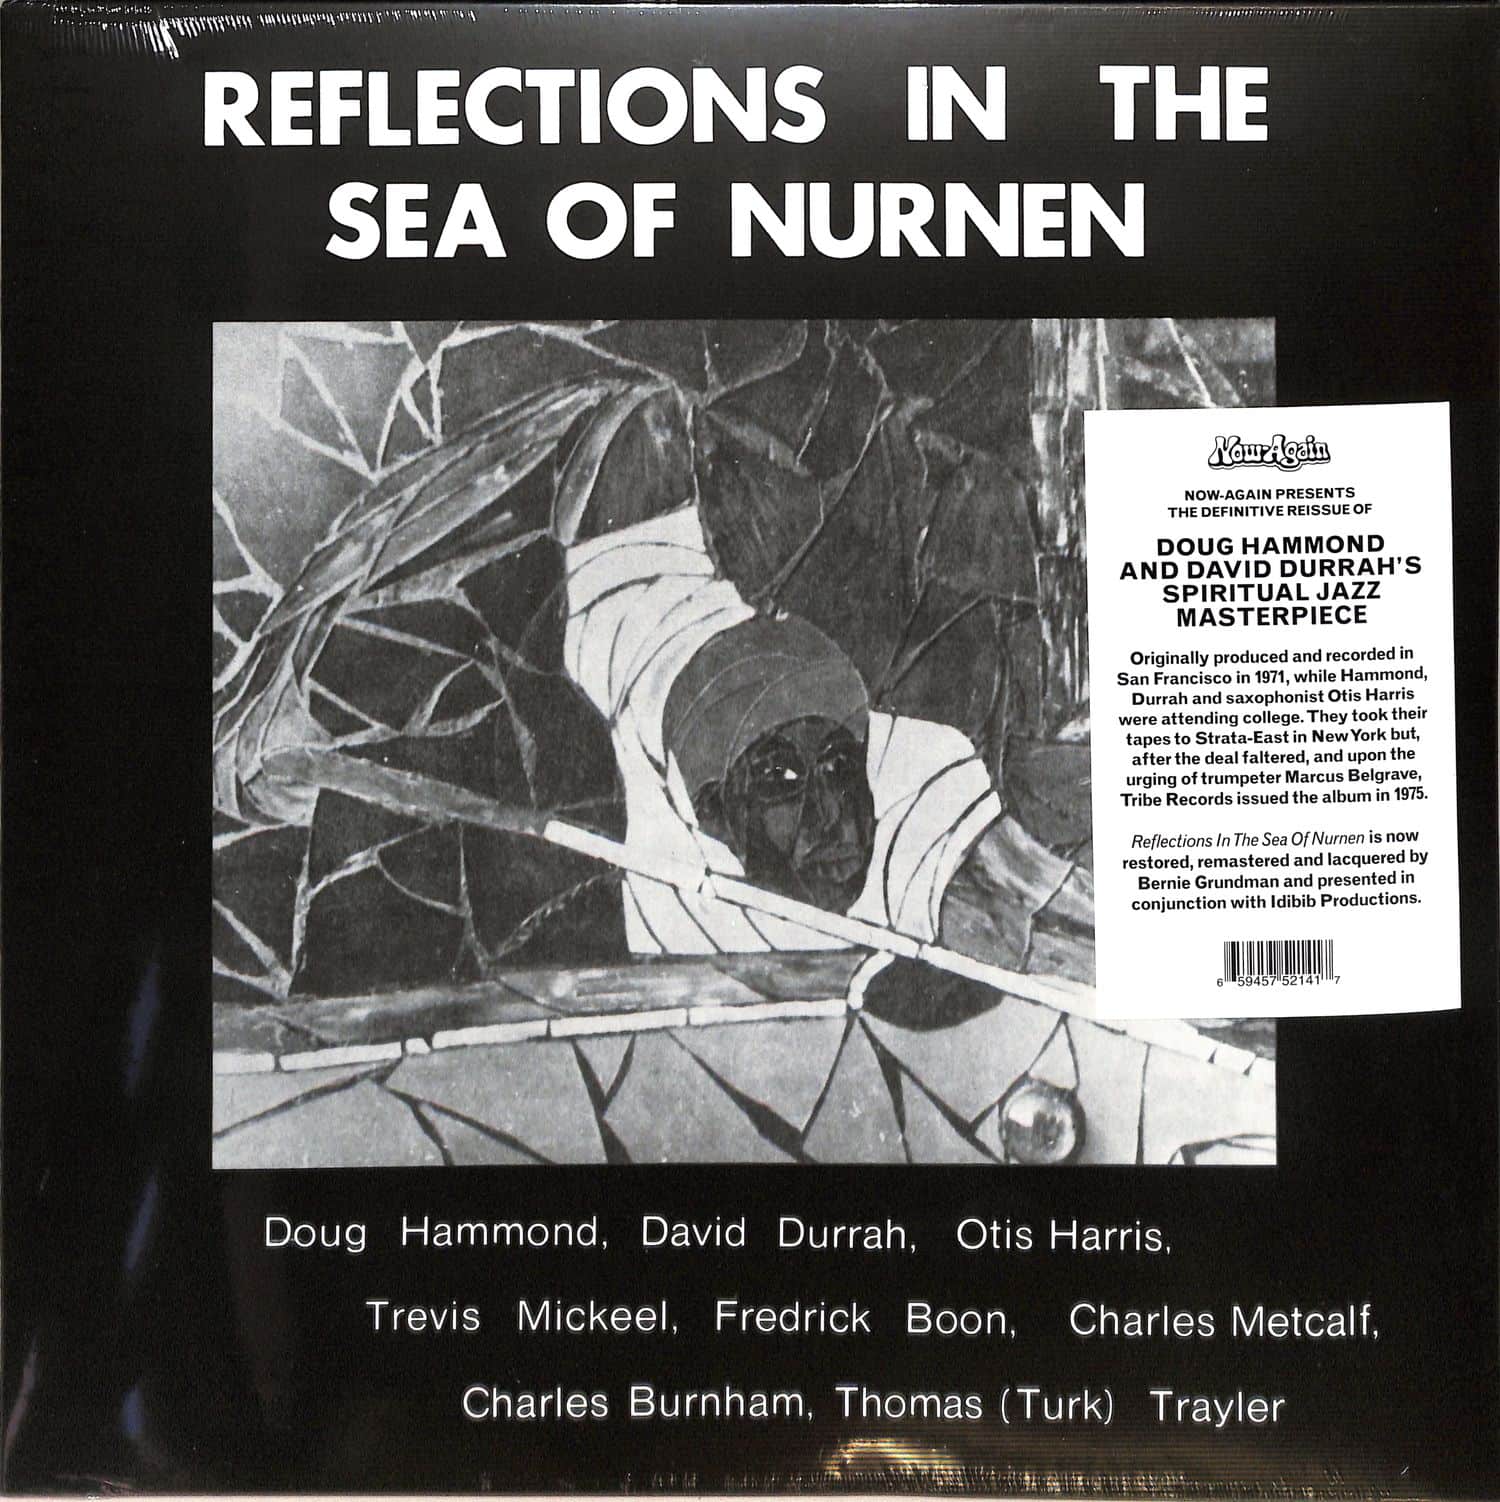 Doug Hammond & David Durrah - REFLECTIONS IN THE SEA OF NURNEN 